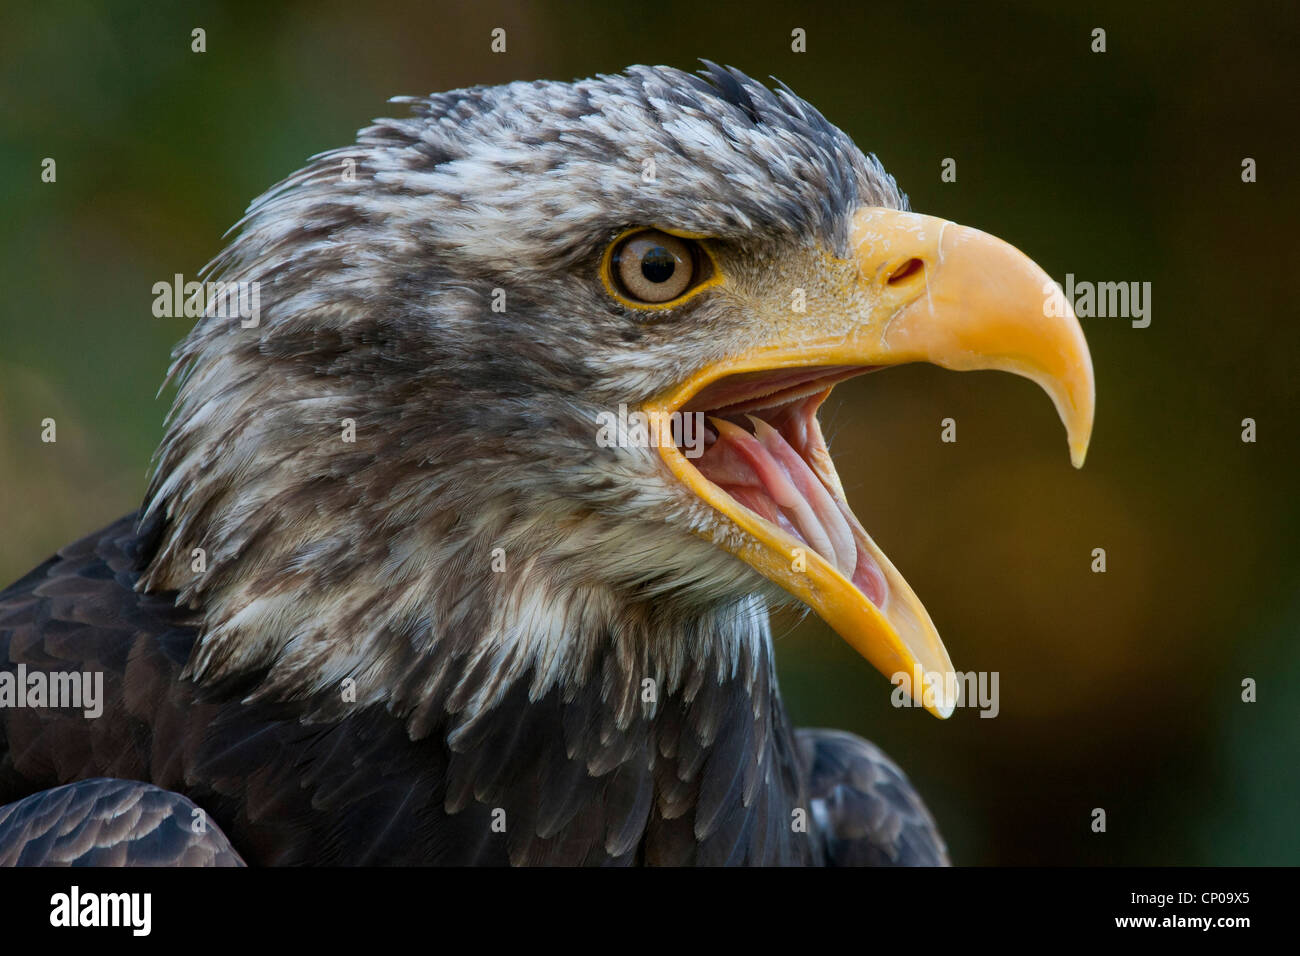 American bald eagle (Haliaeetus leucocephalus), with open beak Stock Photo